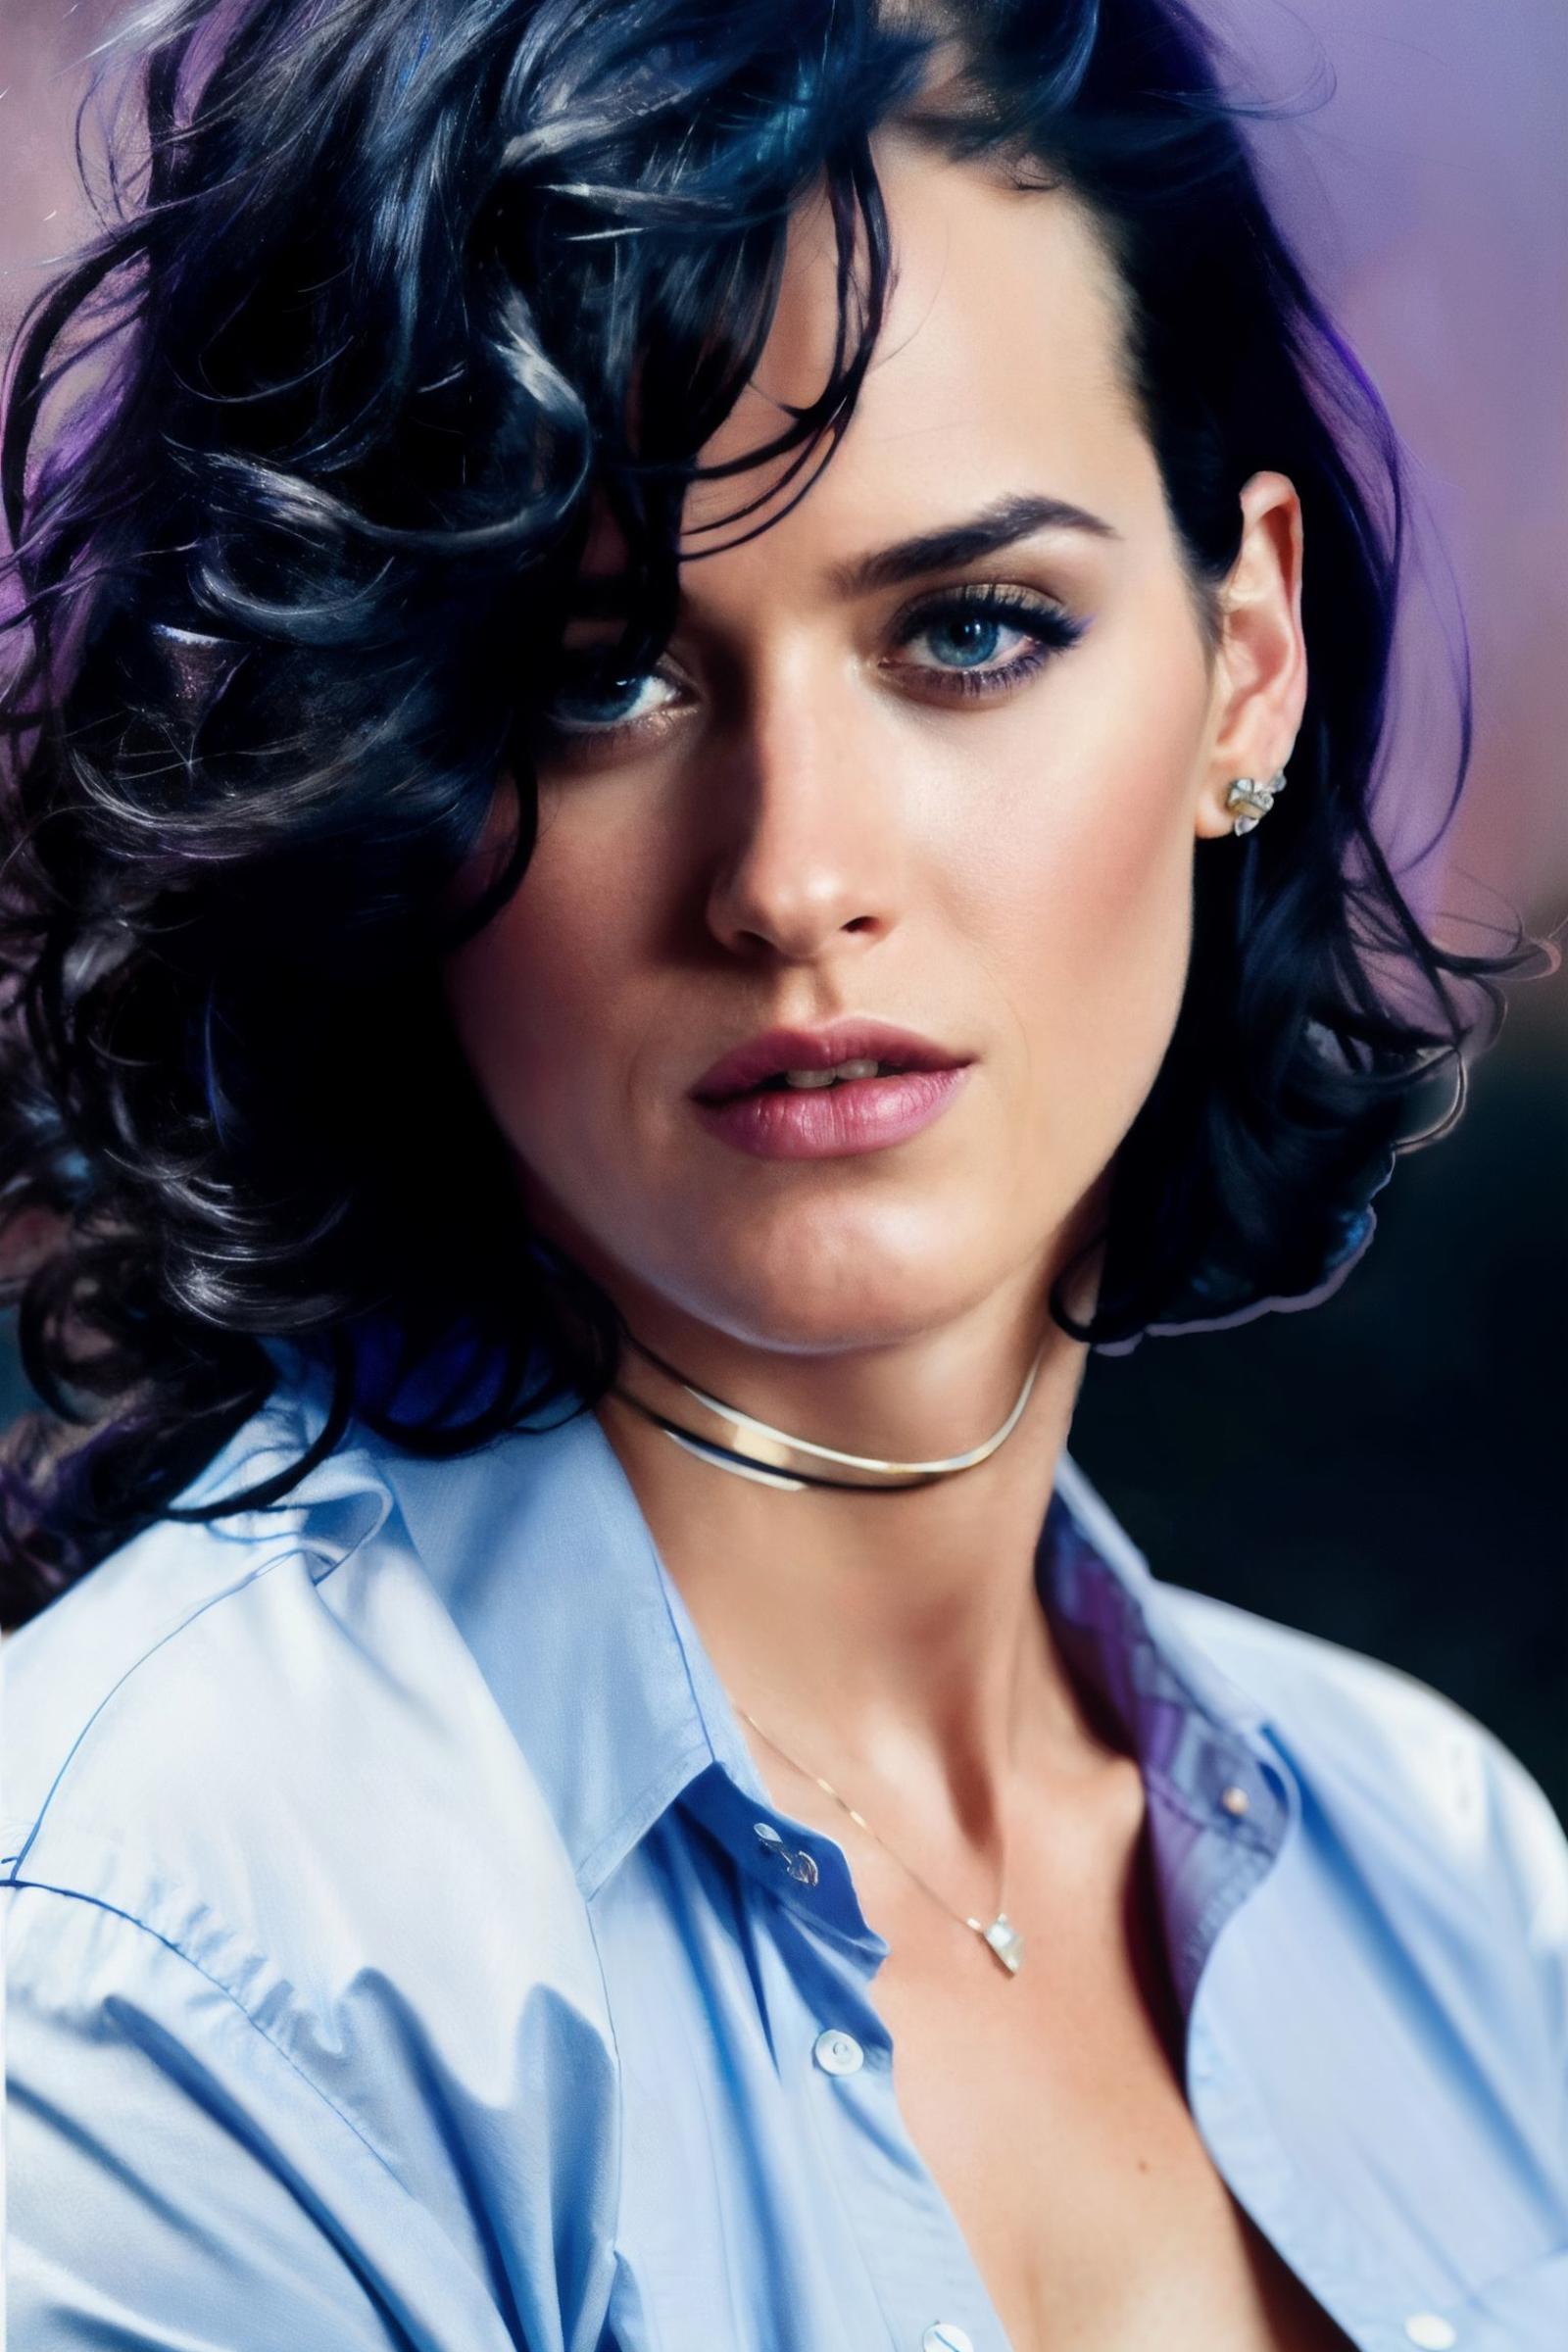 Katy Perry image by frankyfrank2k